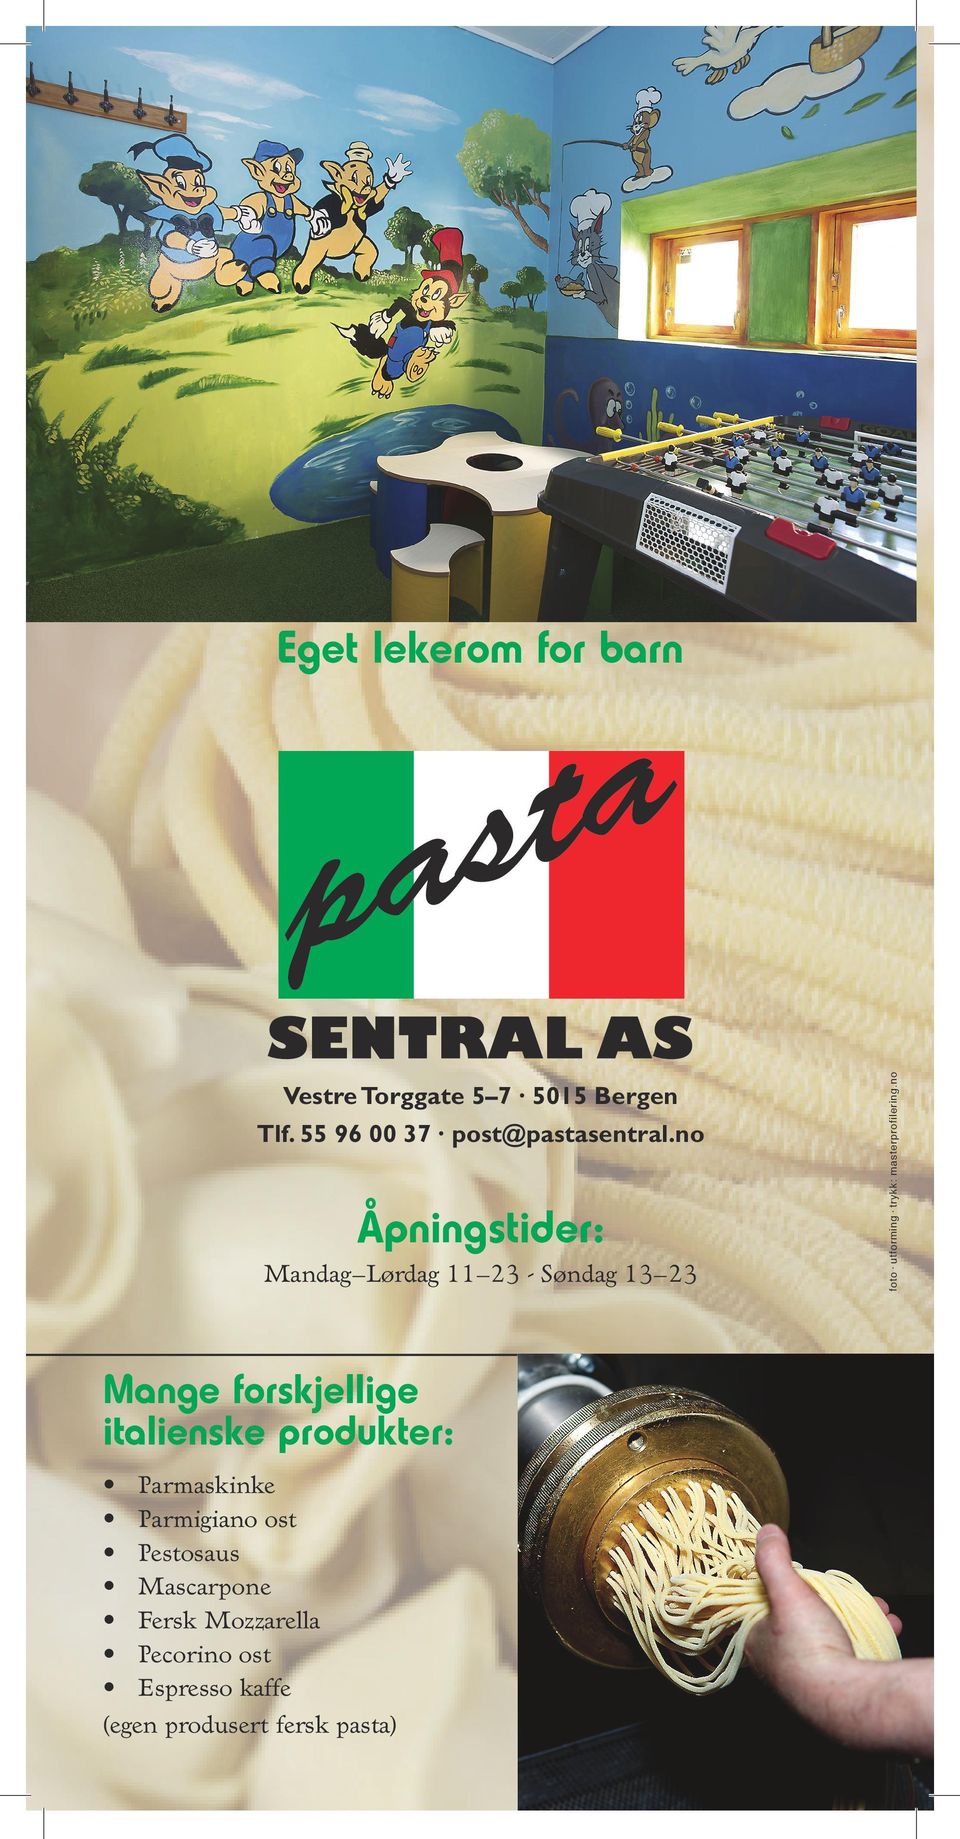 produkter: Parmaskinke Parmigiano ost Pestosaus Mascarpone Fersk Mozzarella Pecorino